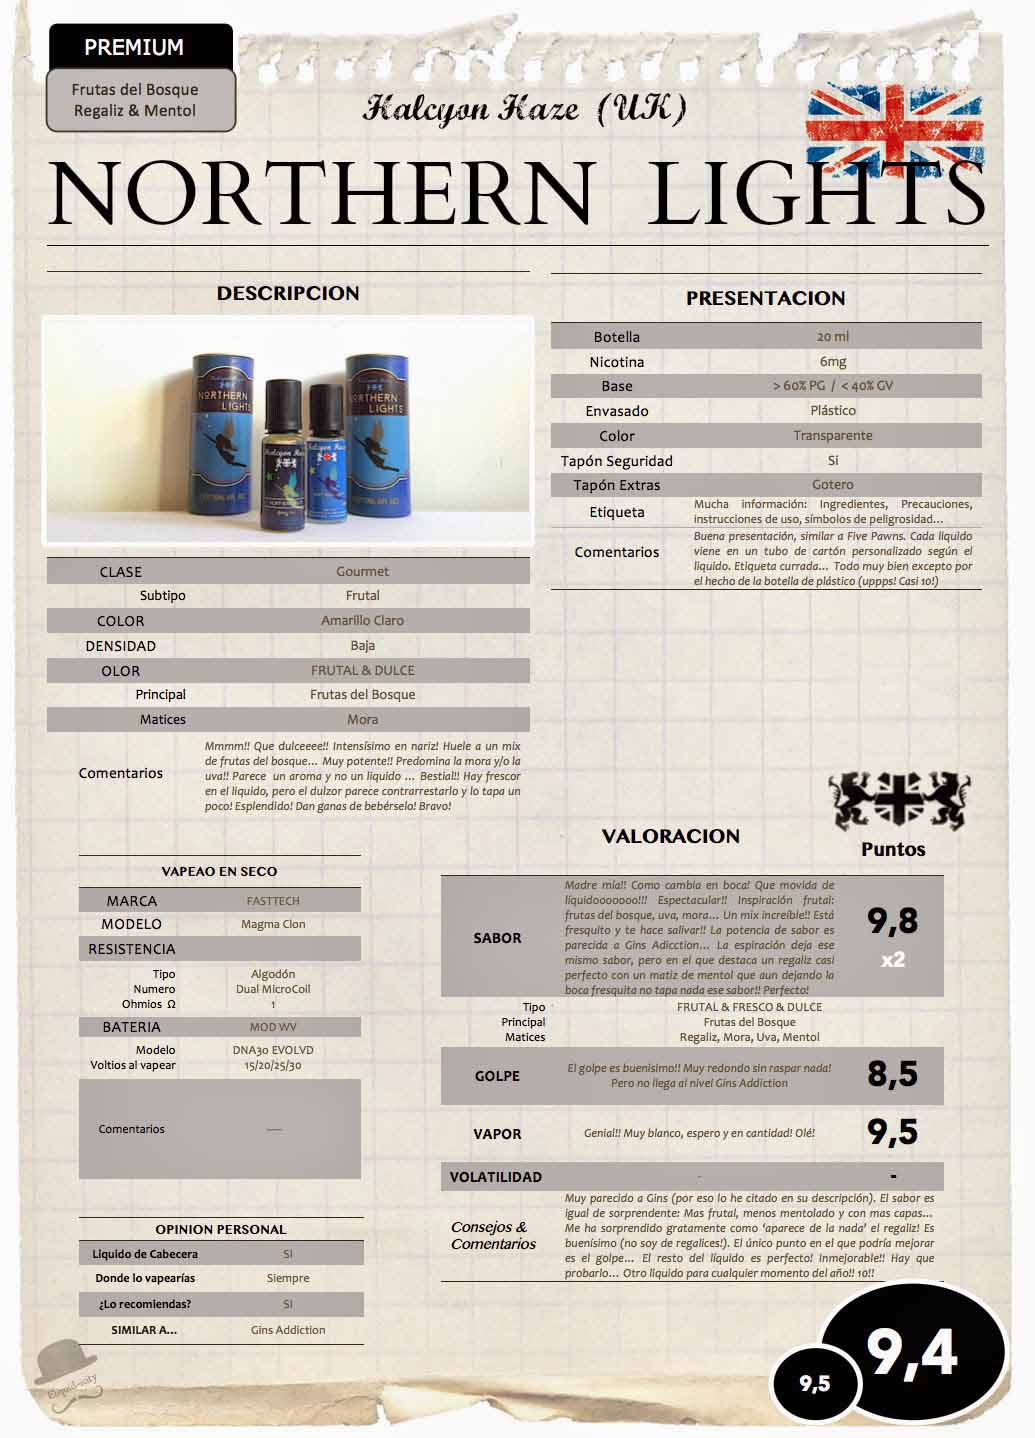  Ficha de e-líquido Northern Lights de Tjuice Halcyon Haze